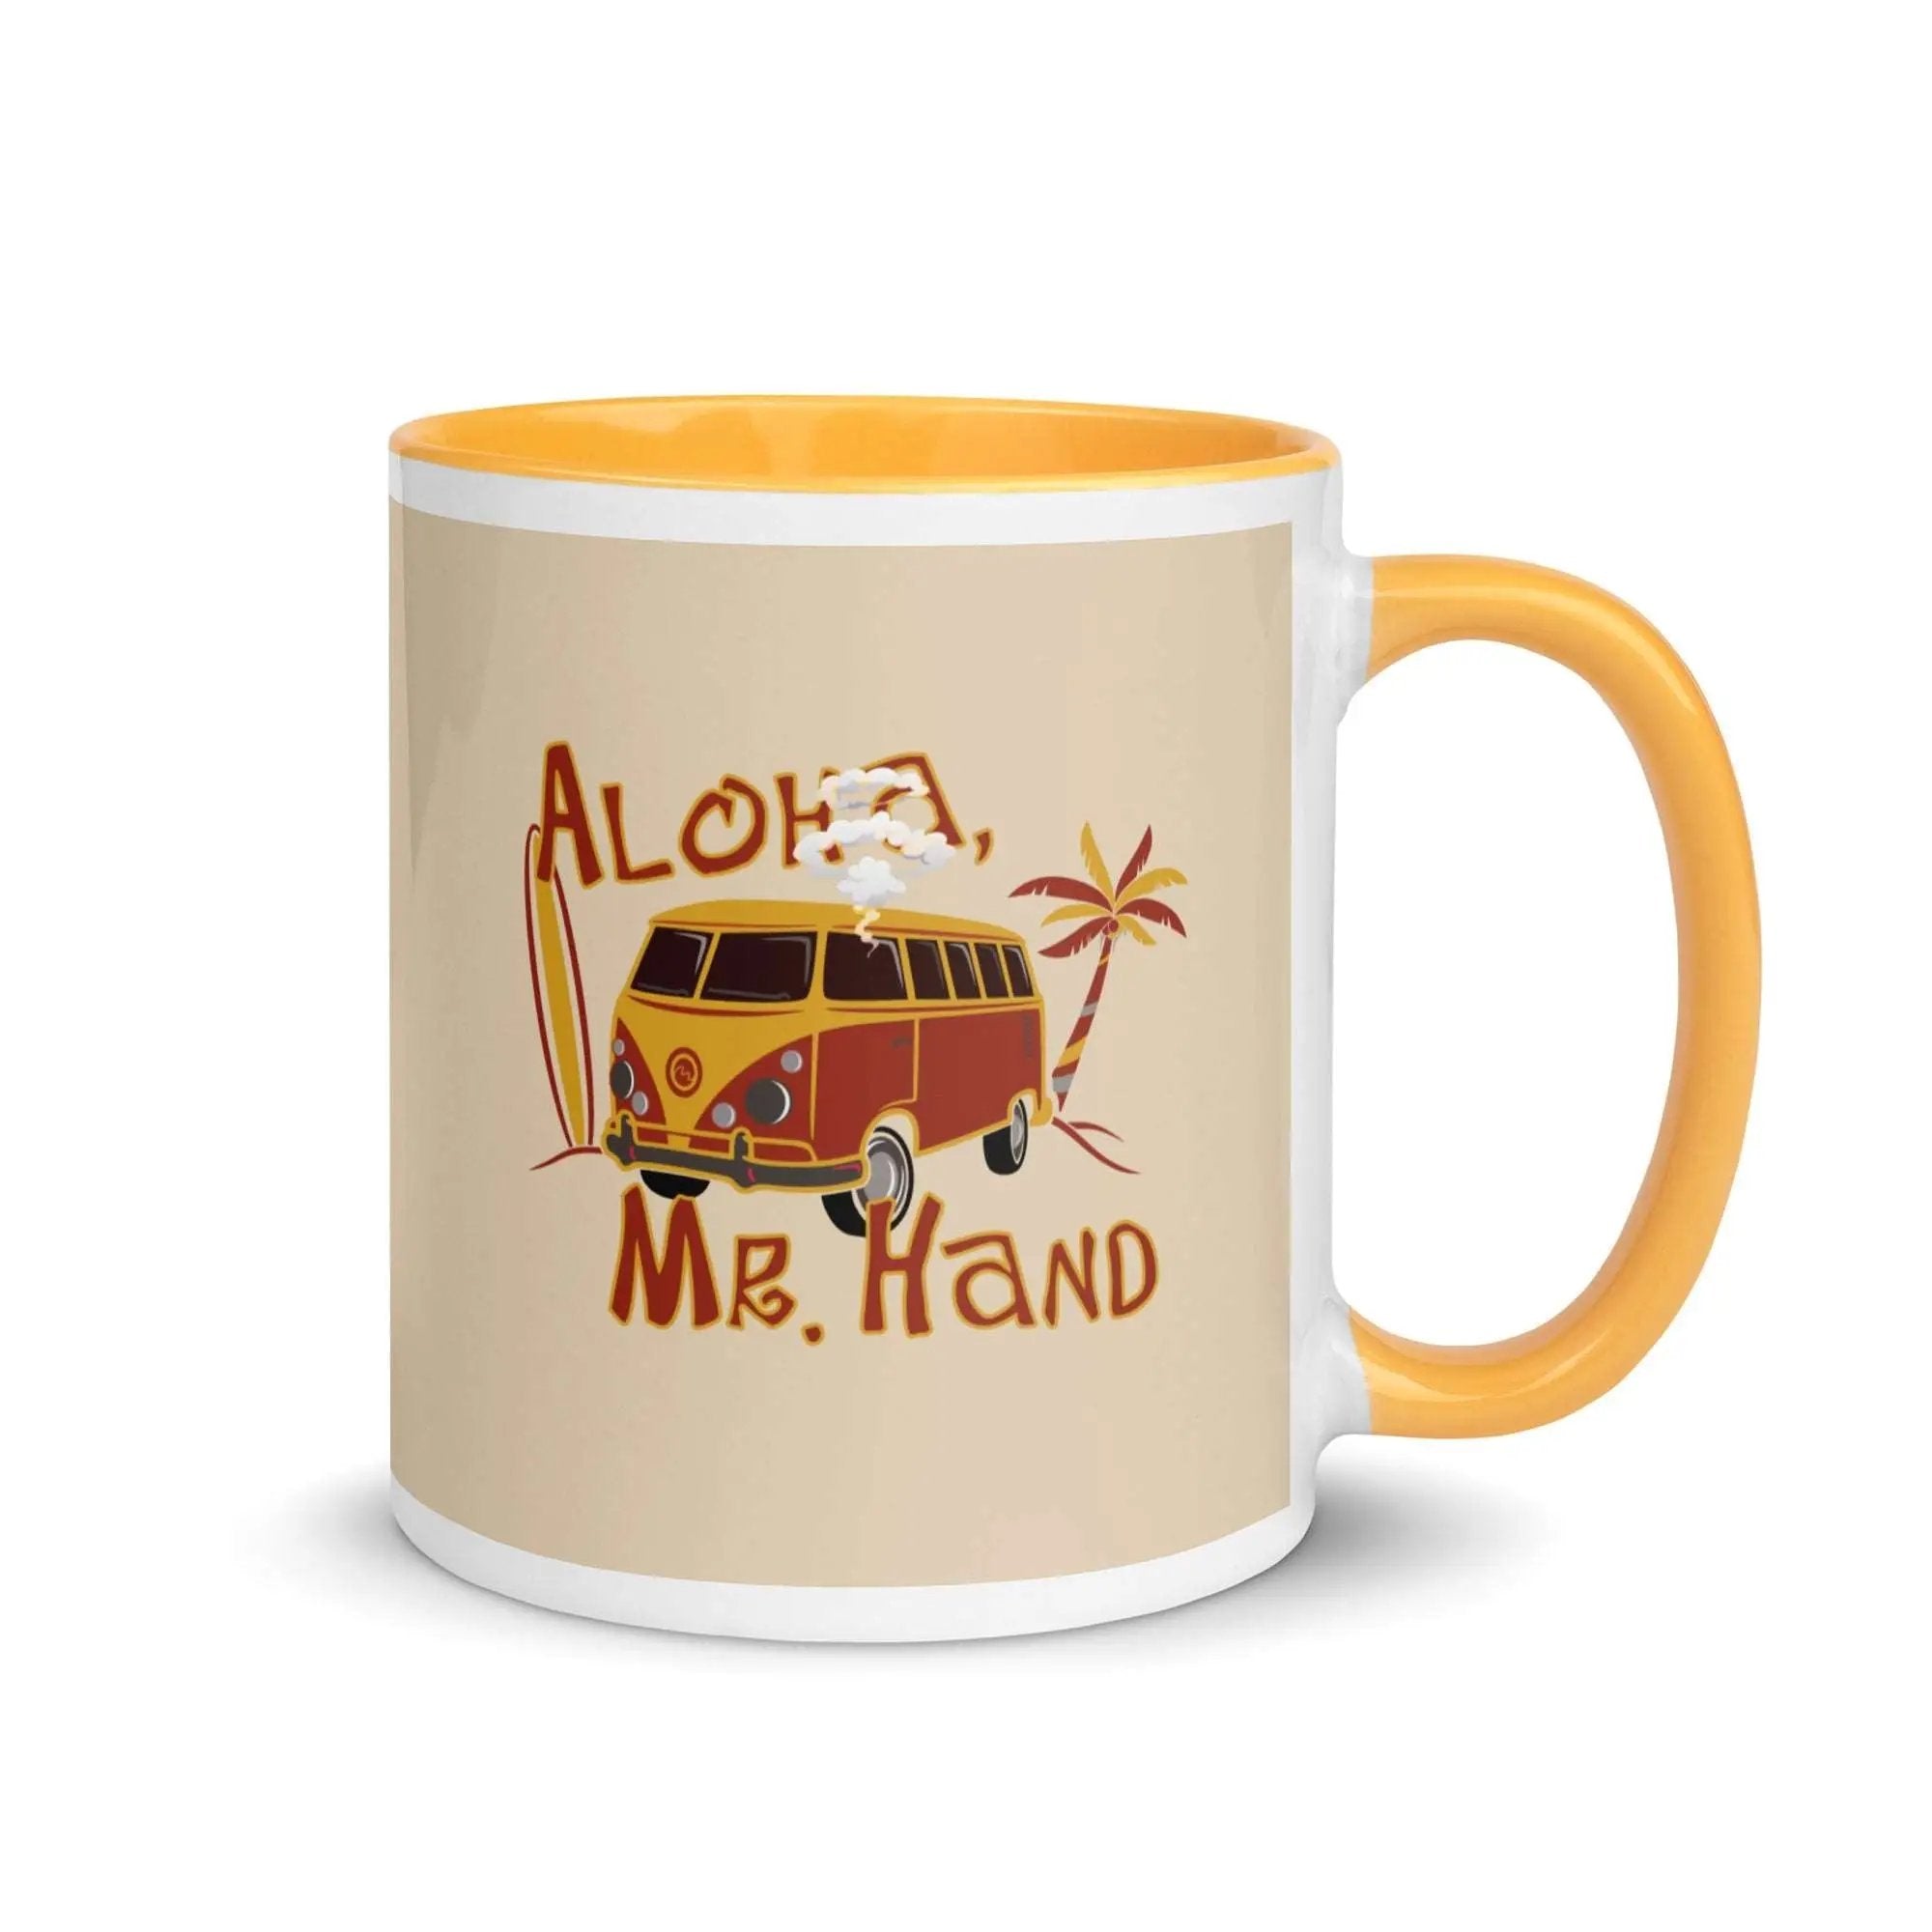 a yellow and white coffee mug with an orange handle